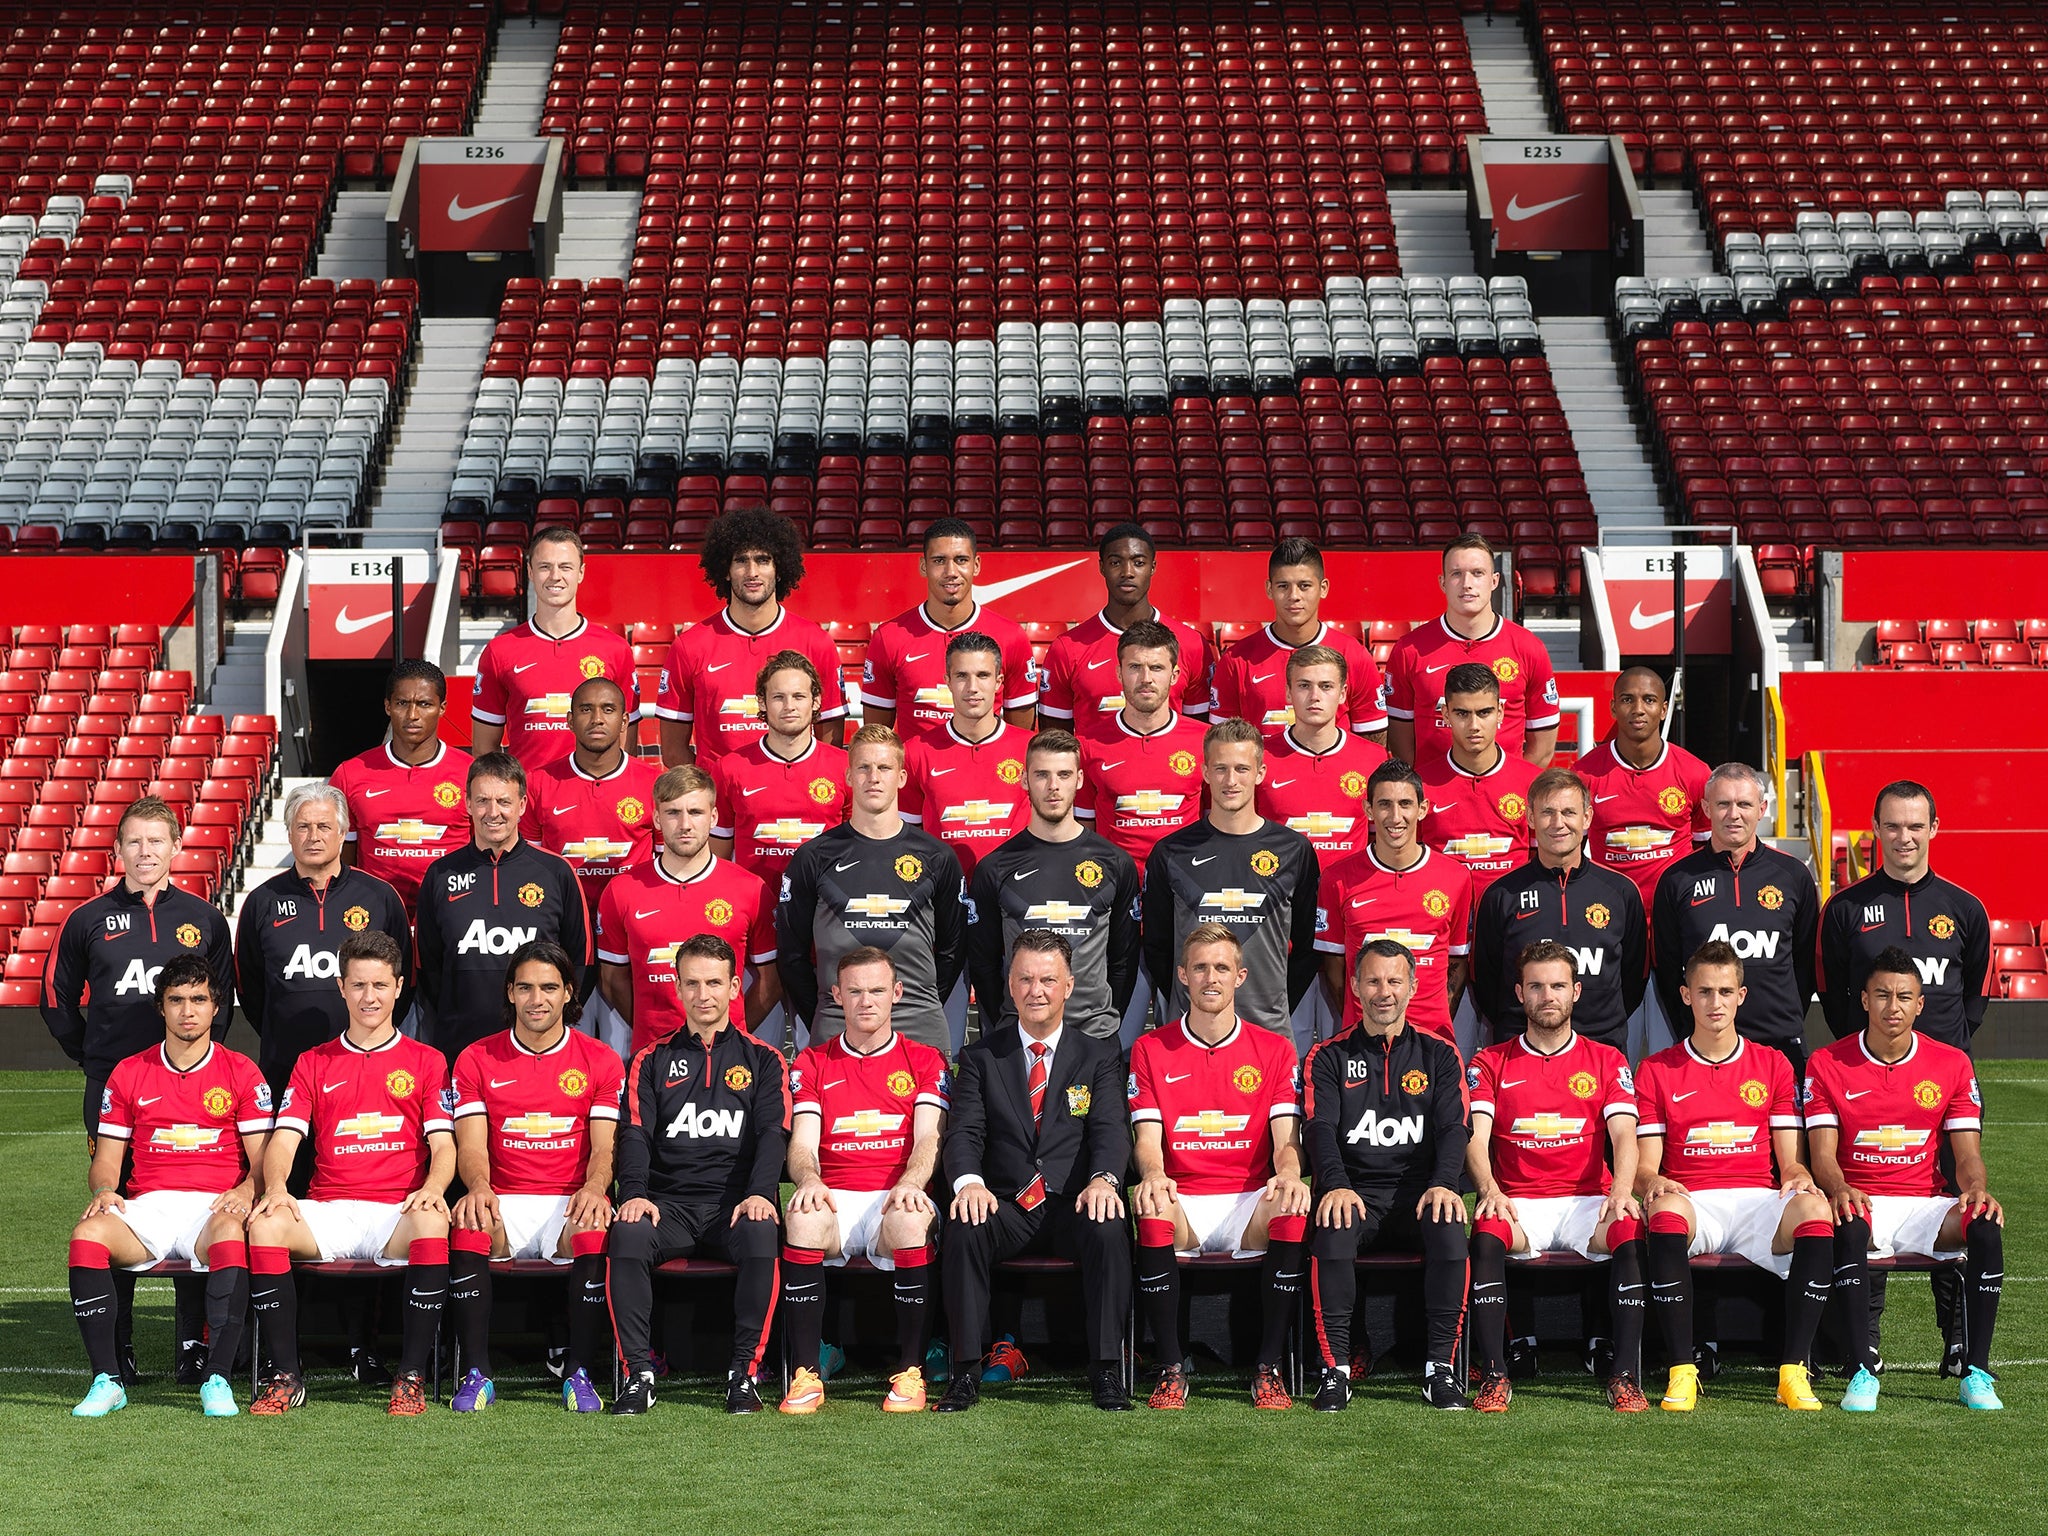 The Manchester United squad photo